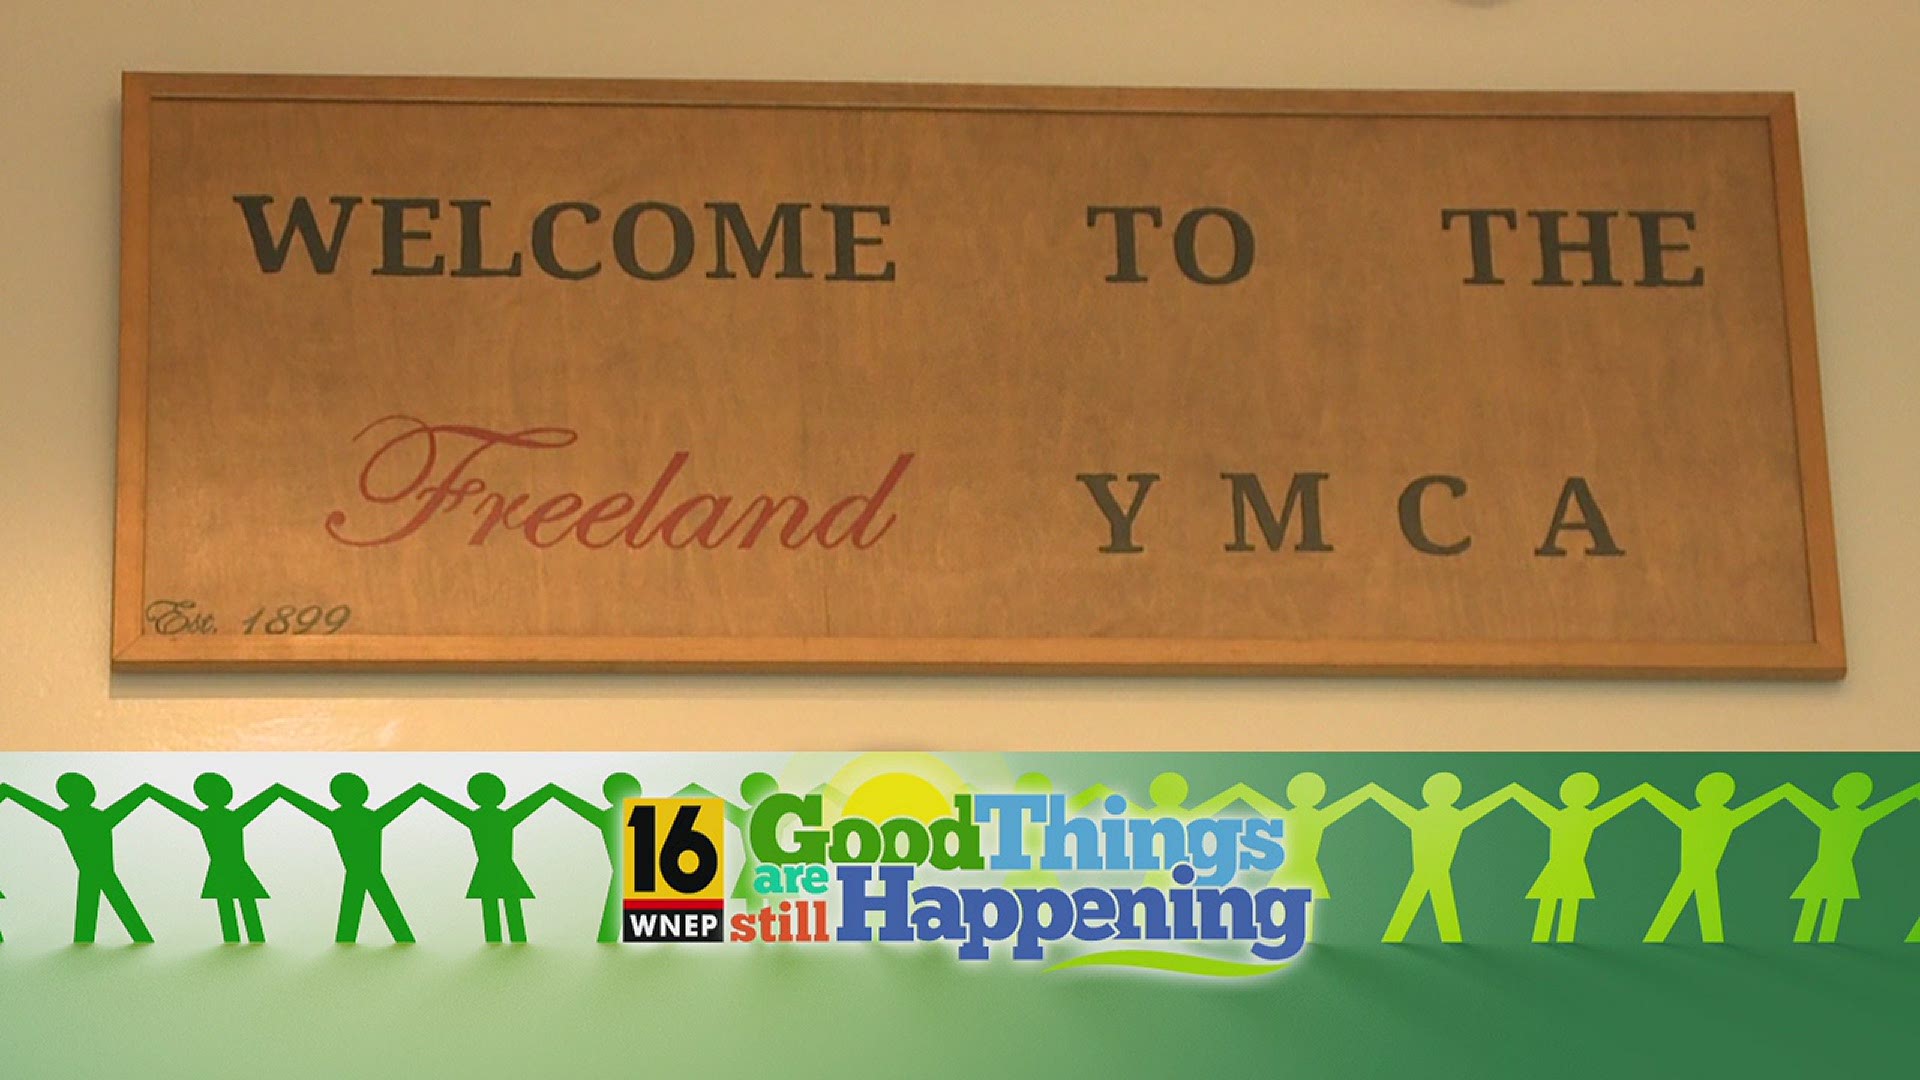 Freeland YMCA Run For the Children